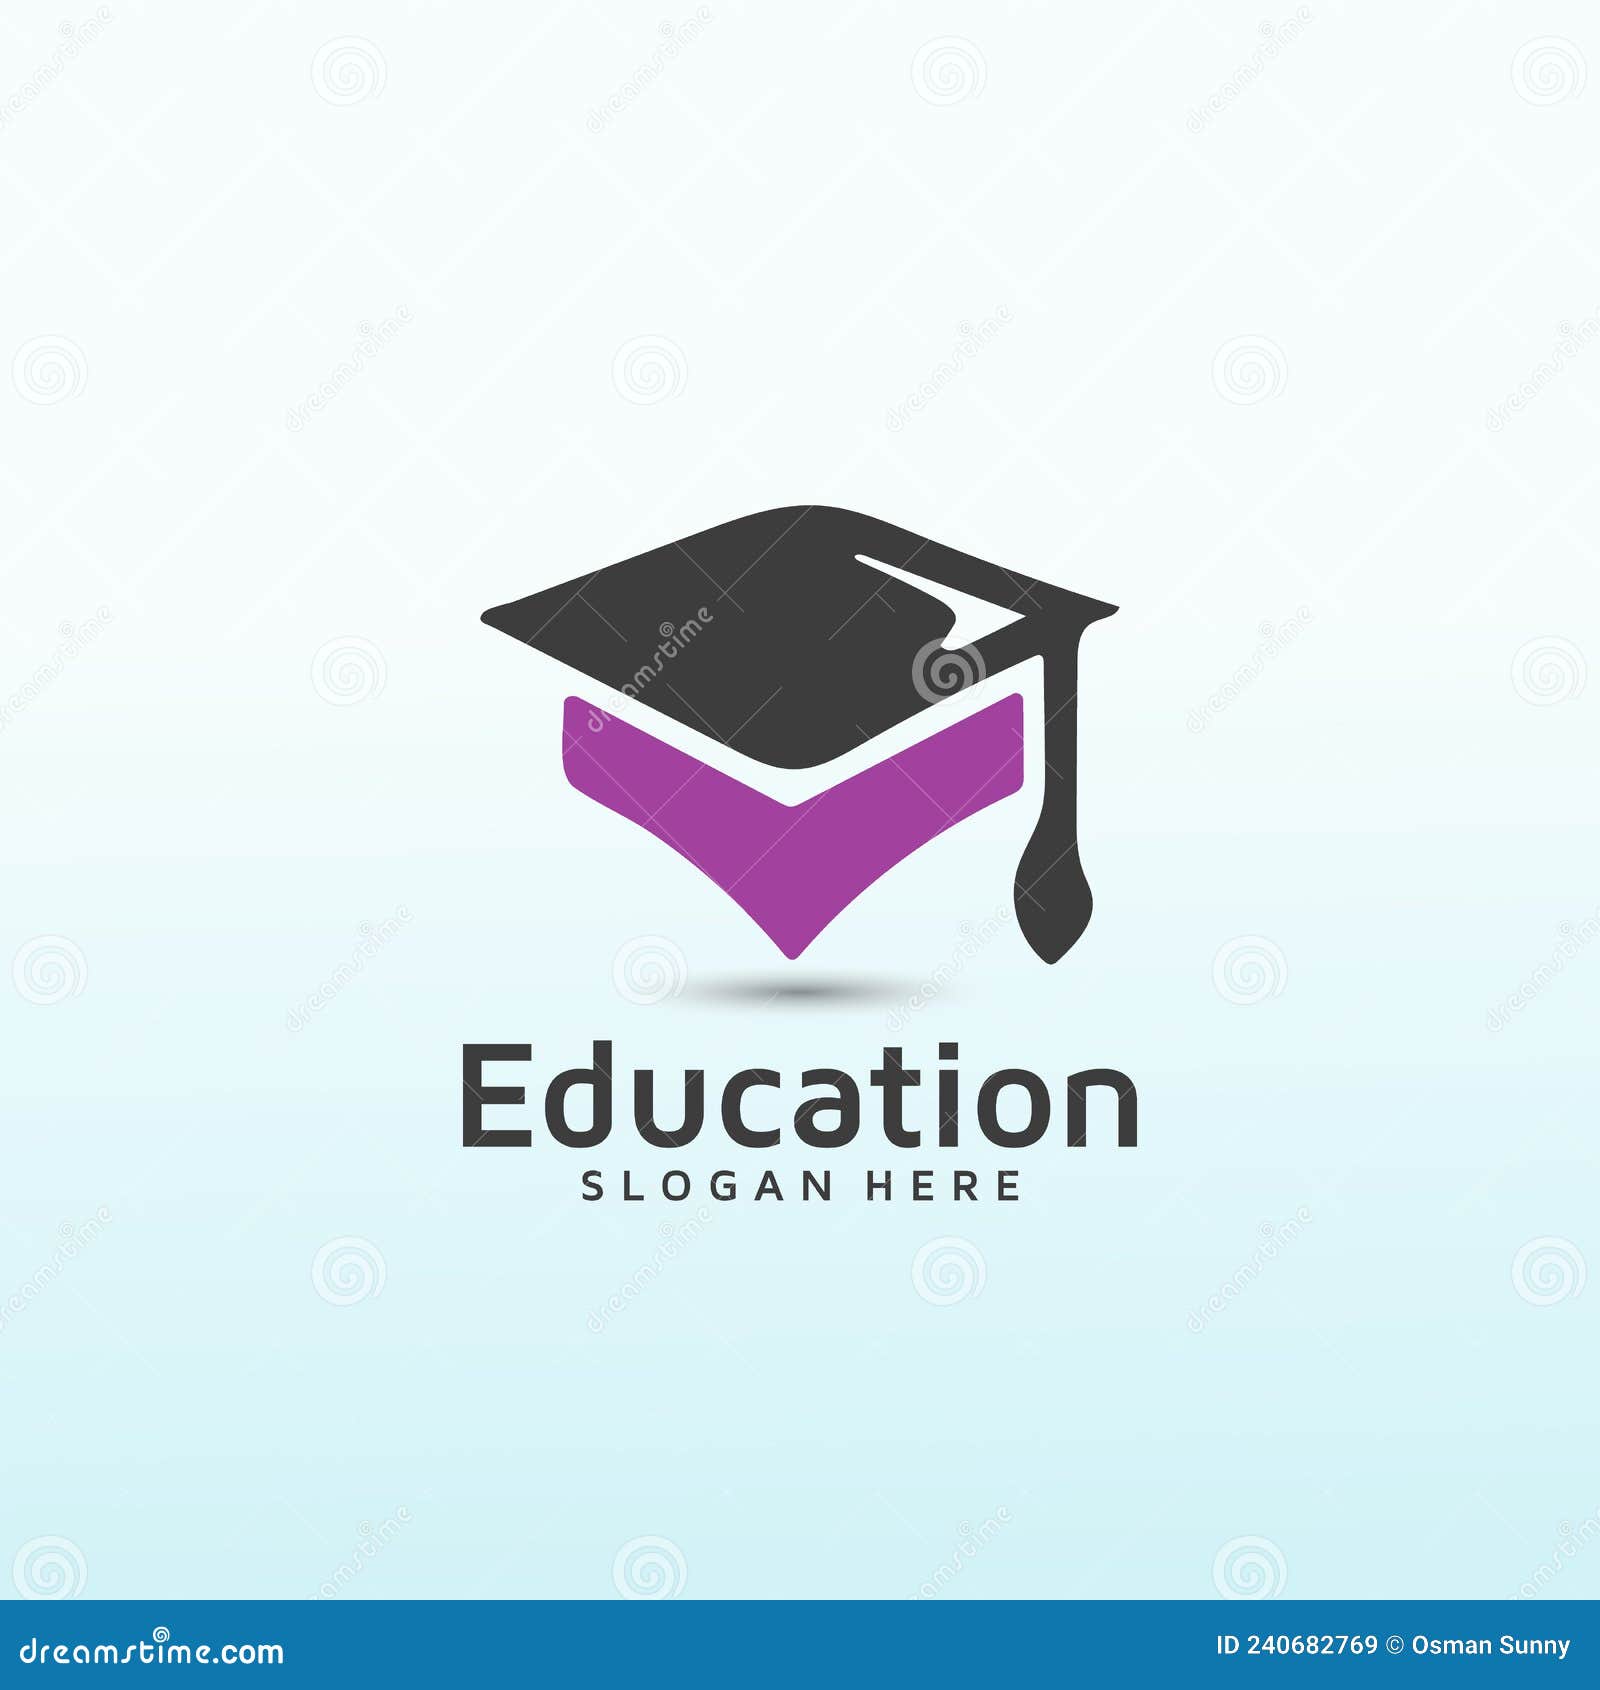 genuine tutors  logo  for education